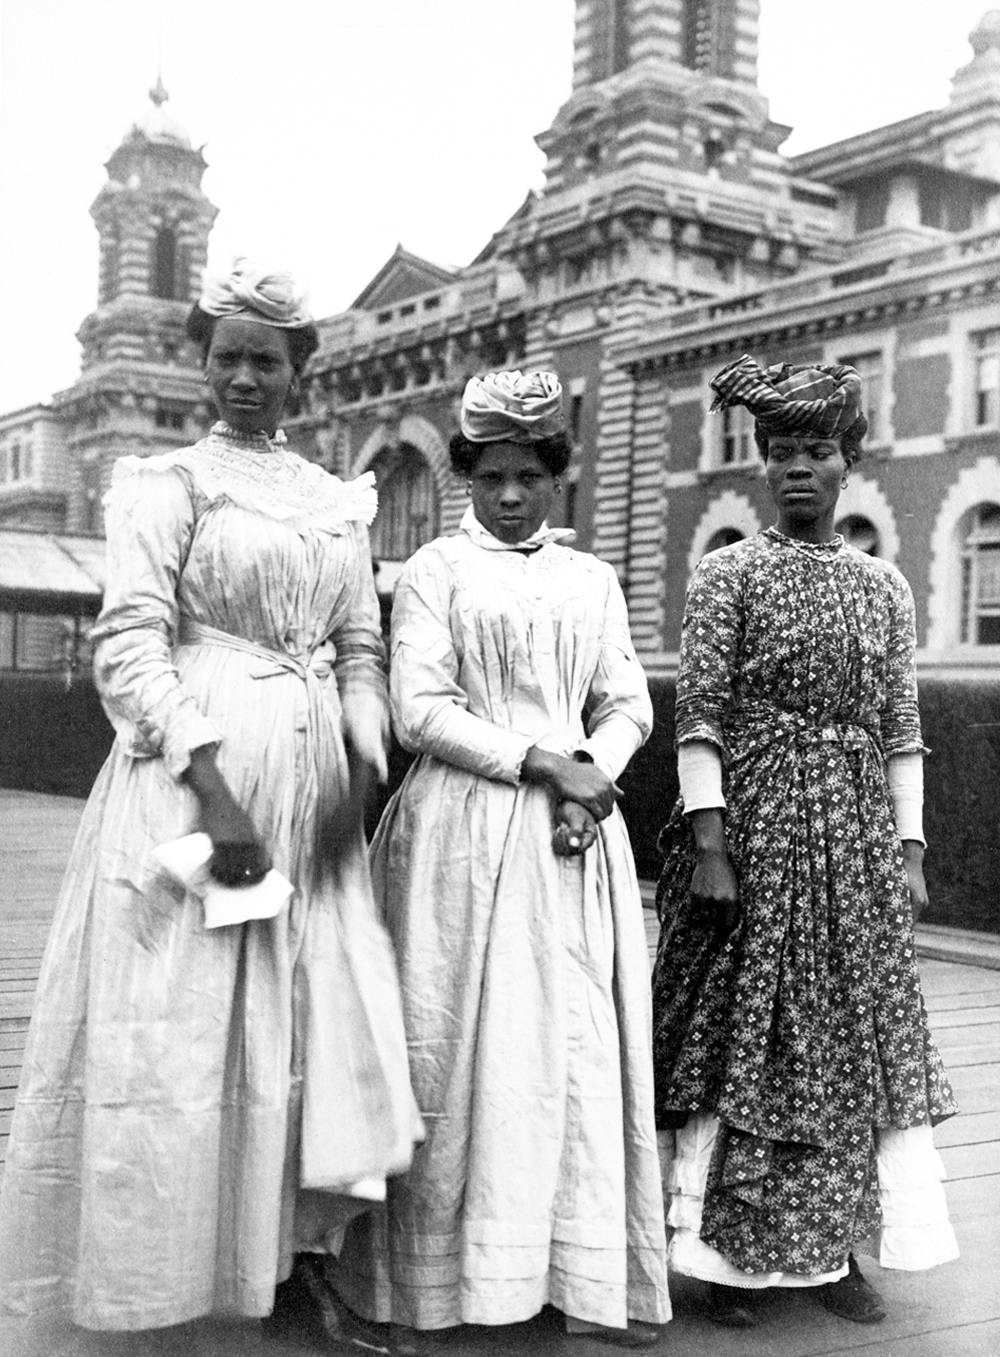 Coming to America! 3 West Indian Ladies on Ellis Island. Image credit: saveellisisland.org